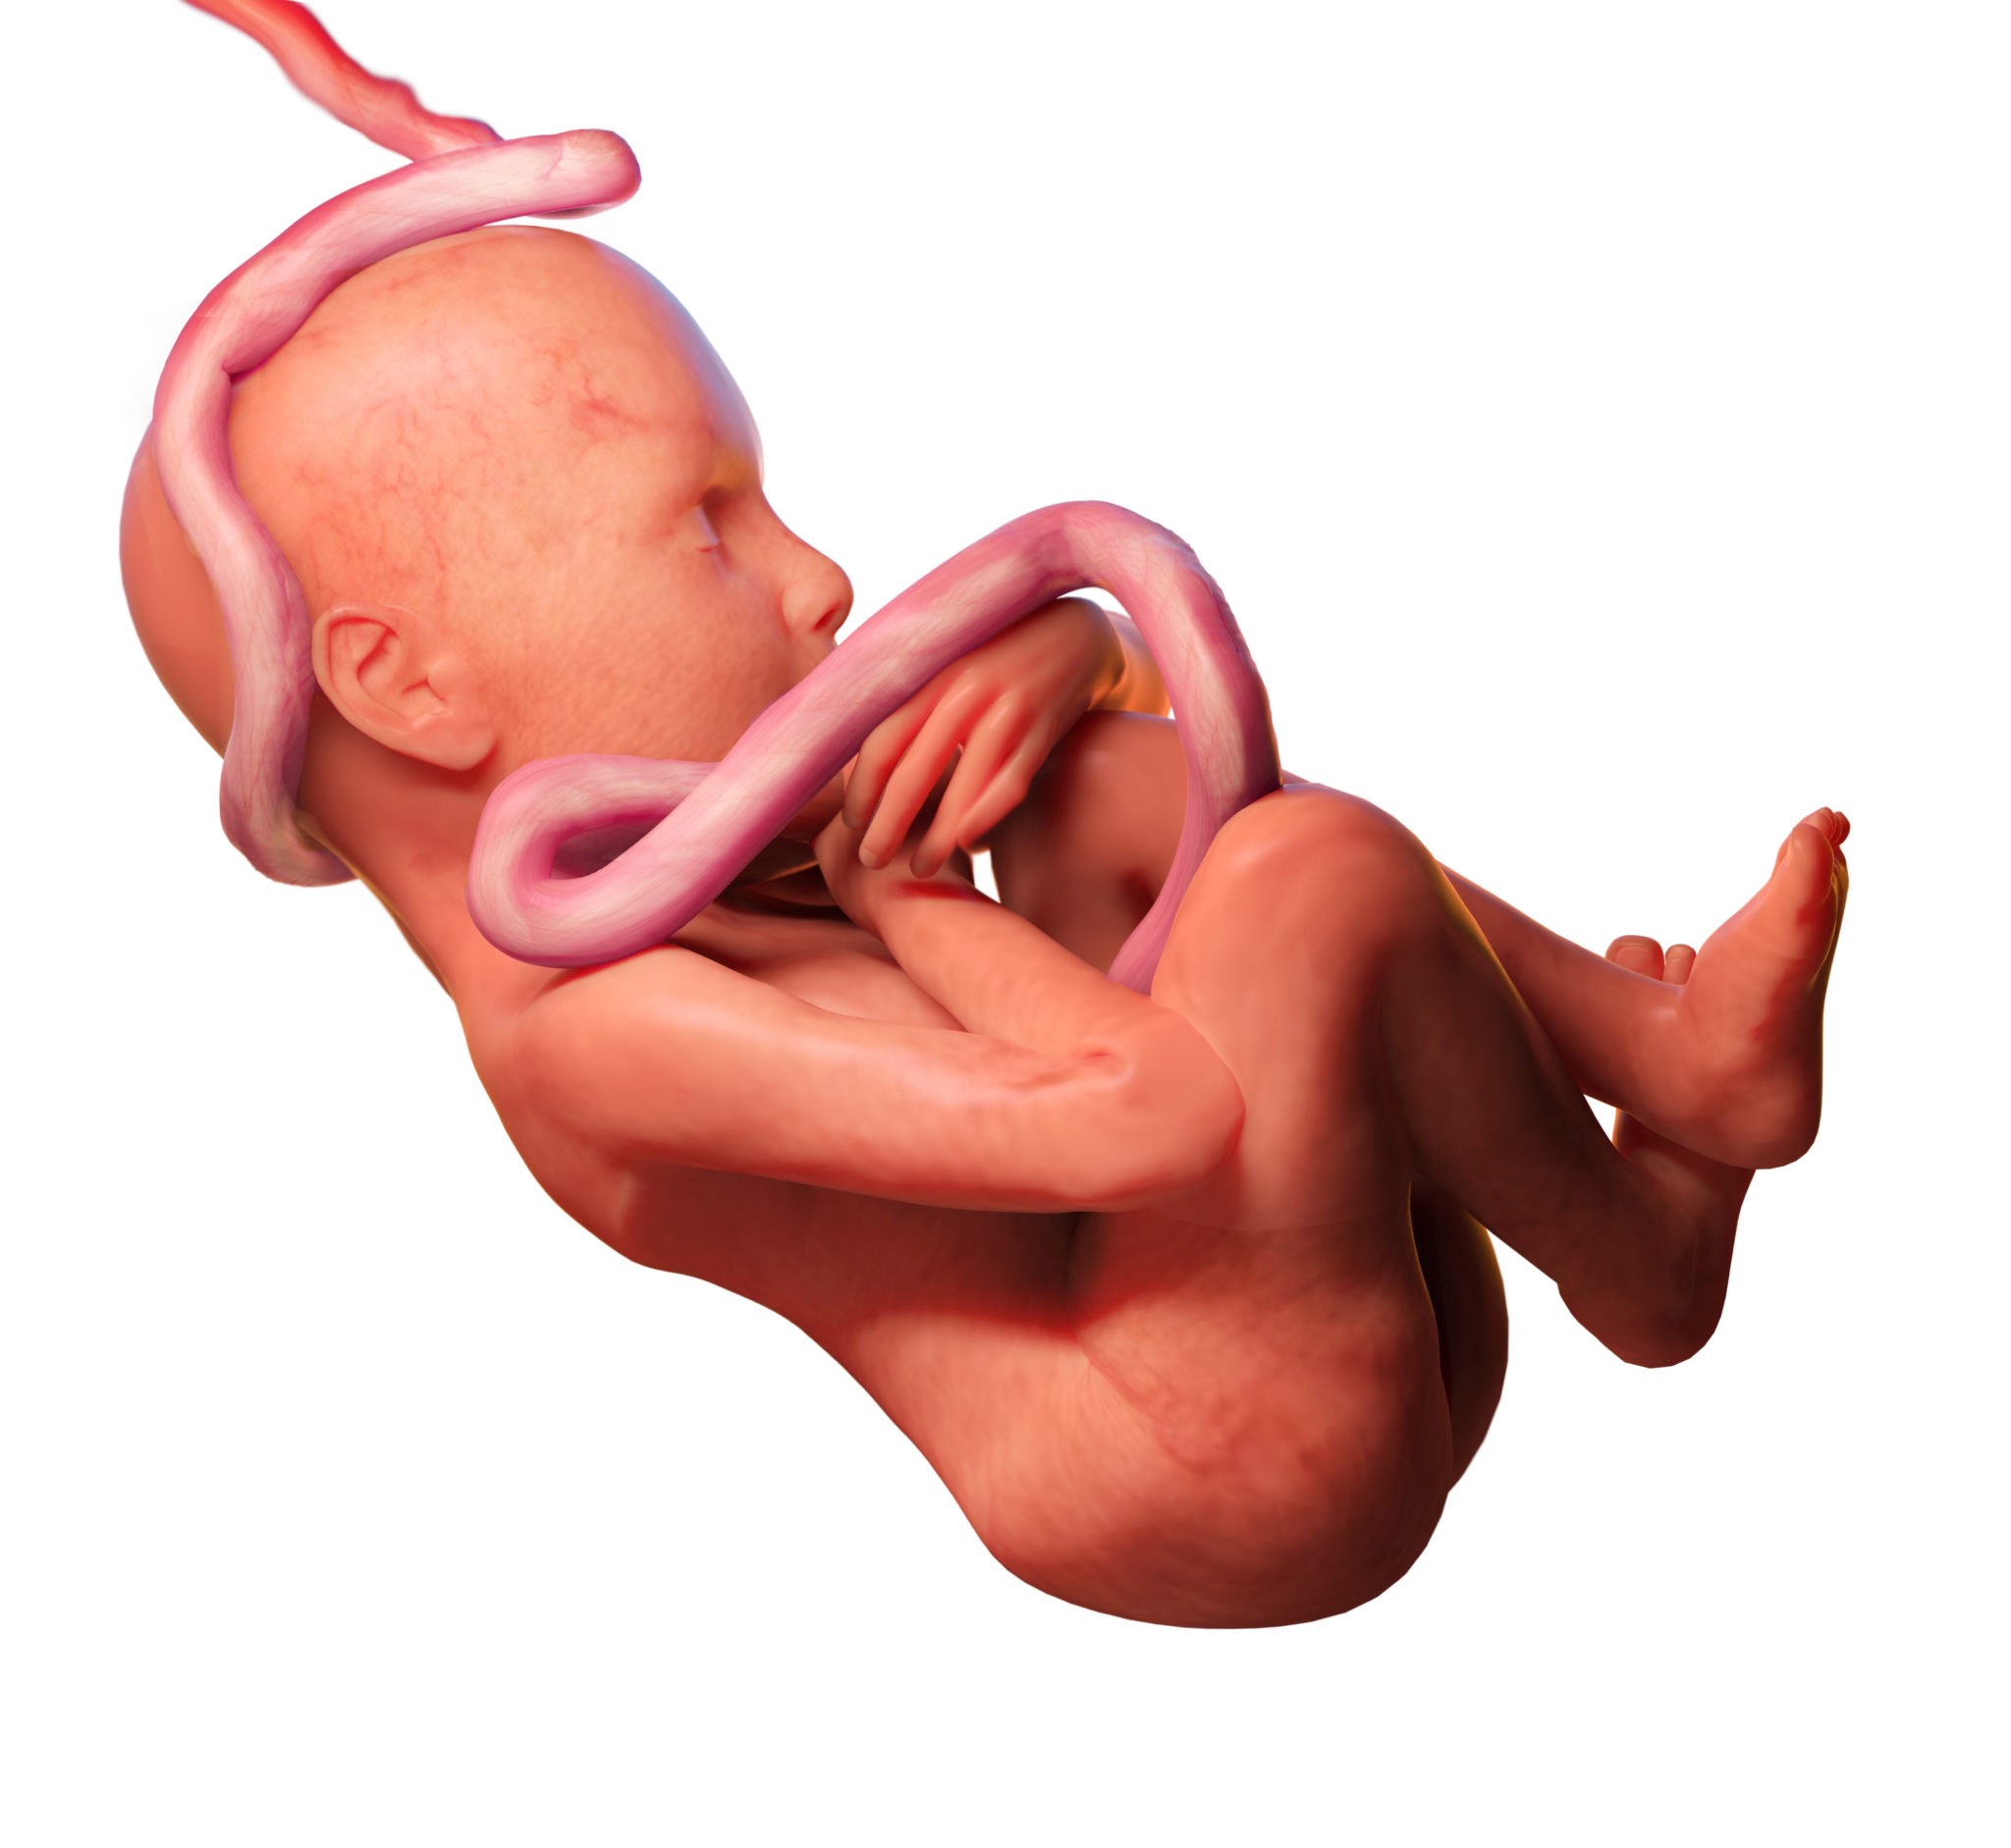 https://www.birthinjuryguide.org/wp-content/uploads/2021/01/Umbilical-scaled.jpg